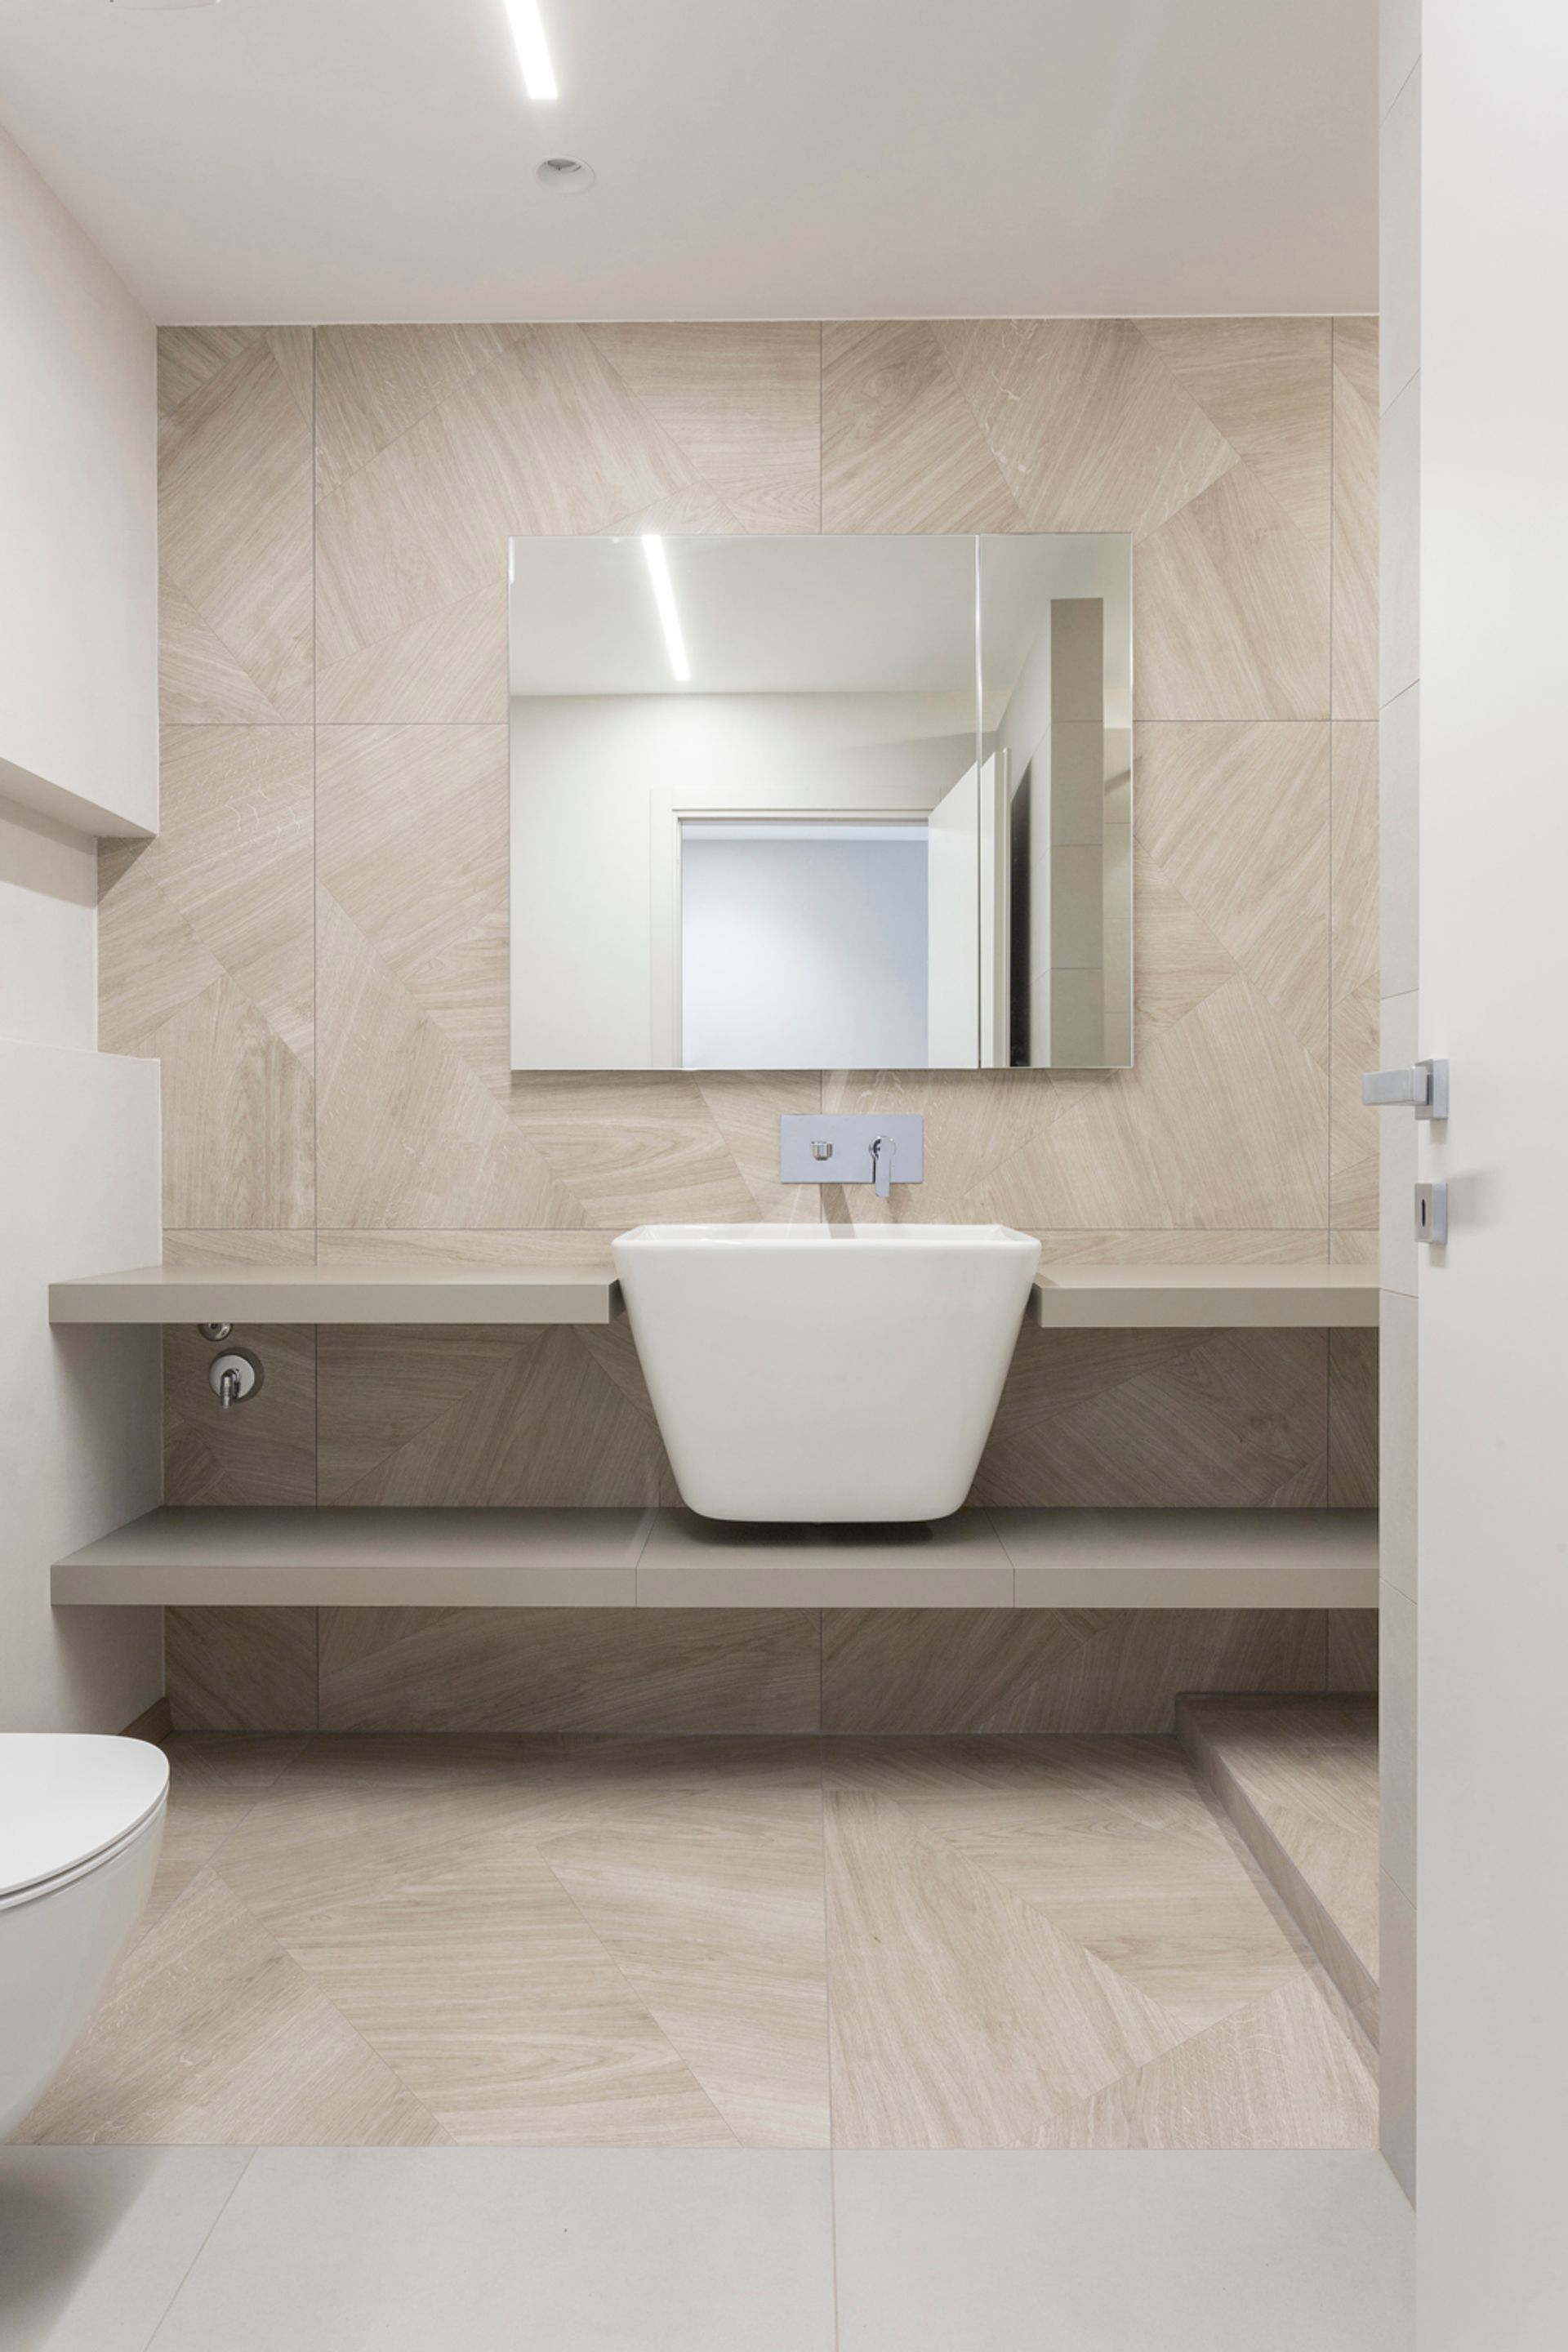 Interior design project, holiday house renovation Lake Garda, Lake Como, Lake Iseo. Officina Magisafi architecture design - bathroom view